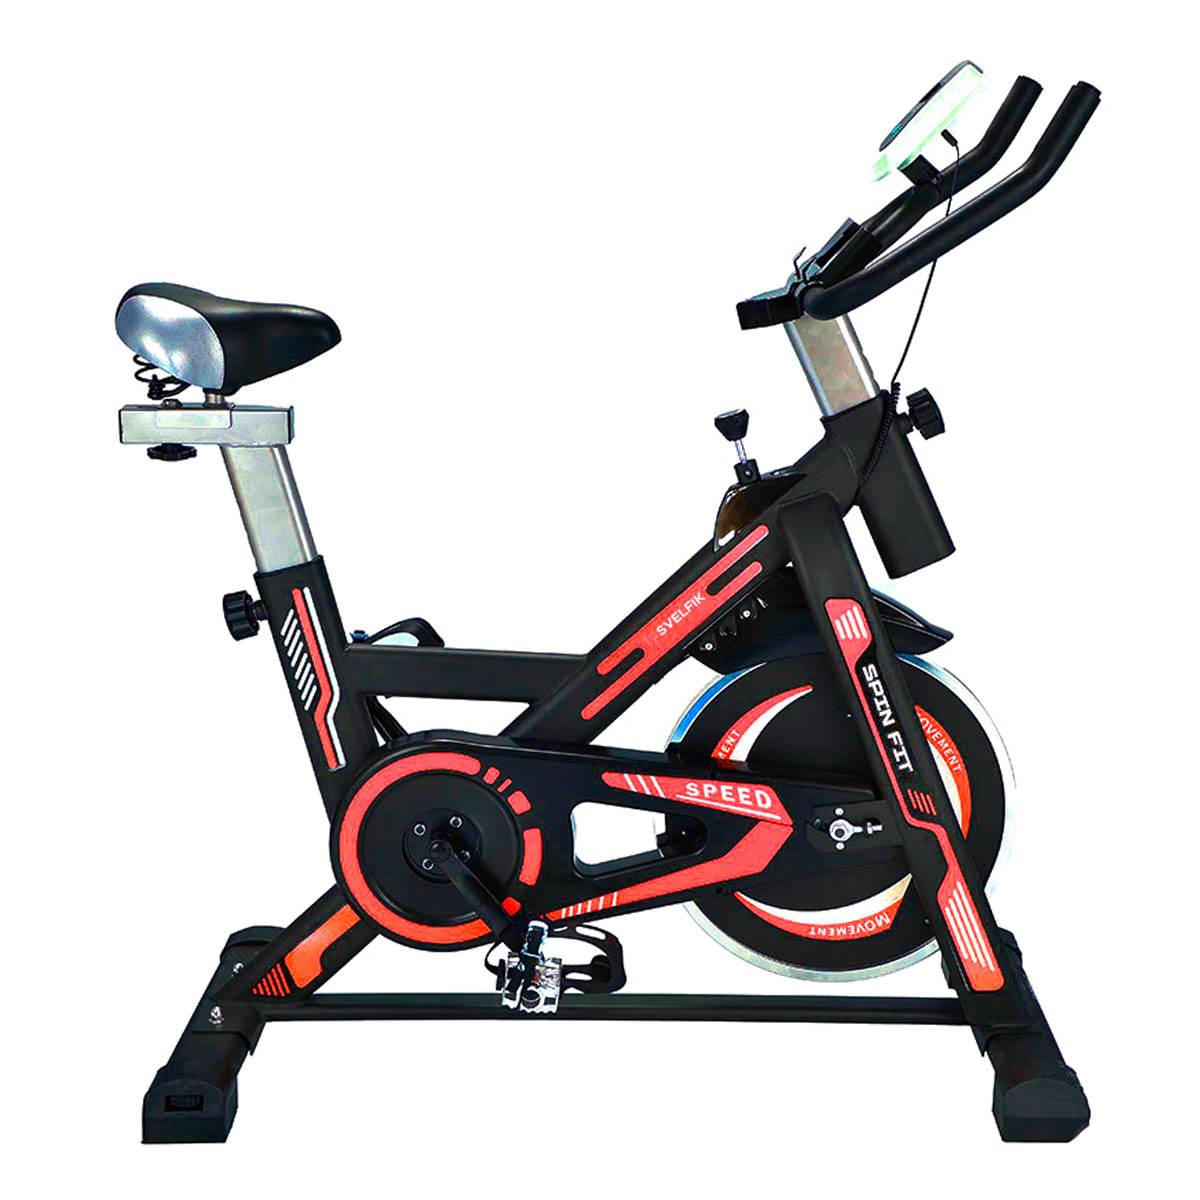 Bicicleta Estática Spinning Gimnasio Roja Svelfik Cardio Profesional 6 KG